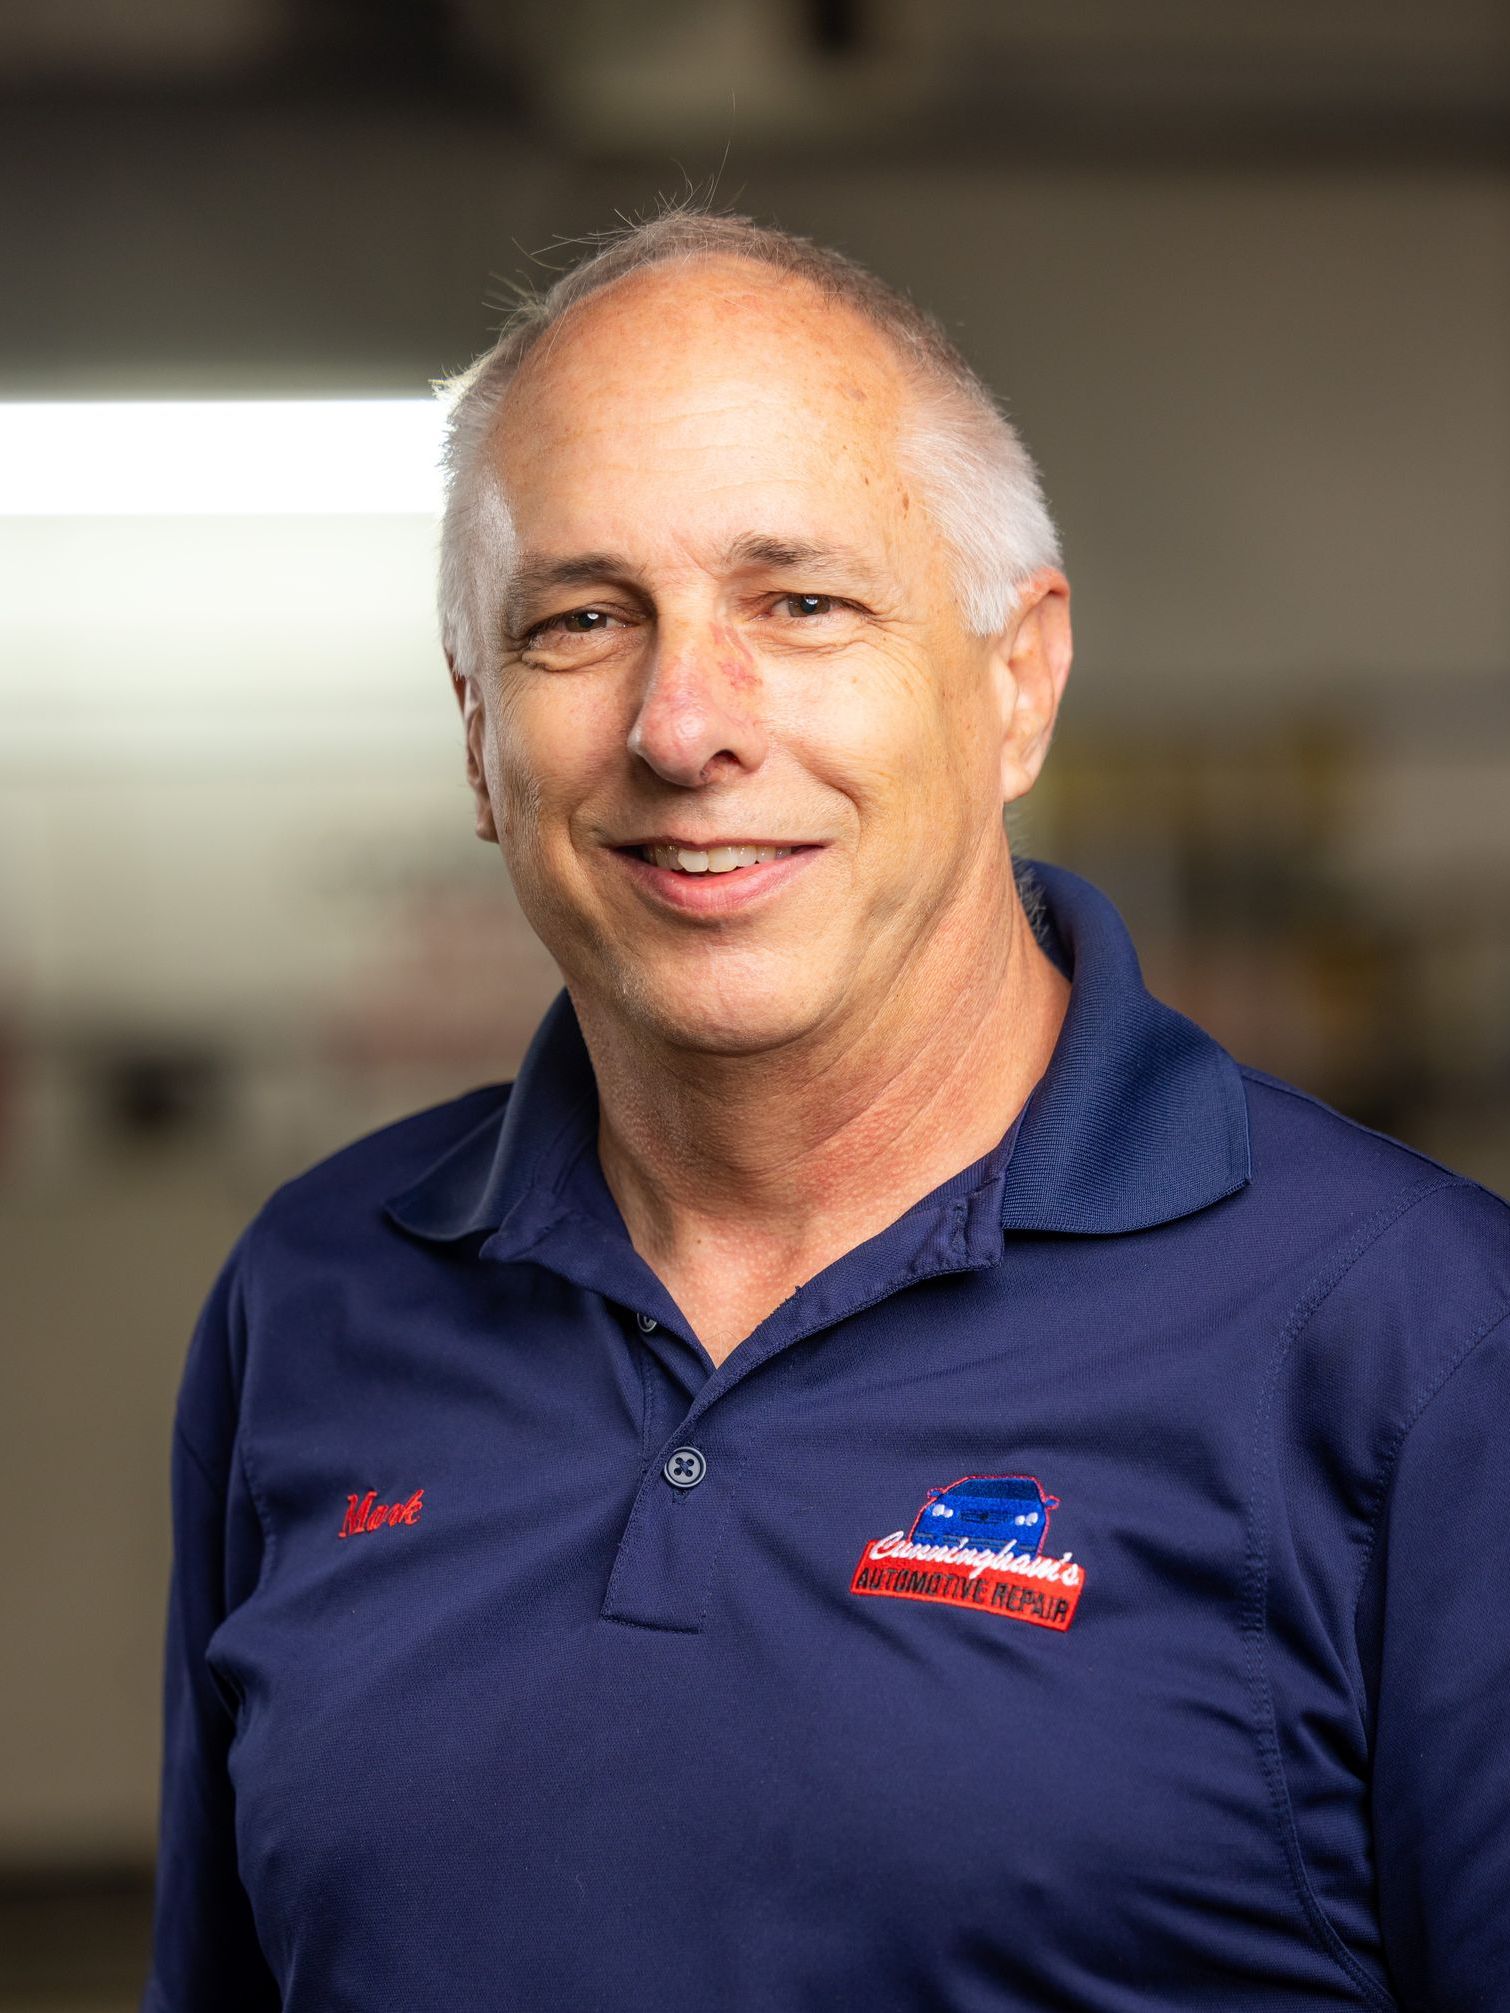 Mark Cunningham - Owner of Cunningham's Automotive Repair in Ottsville, PA